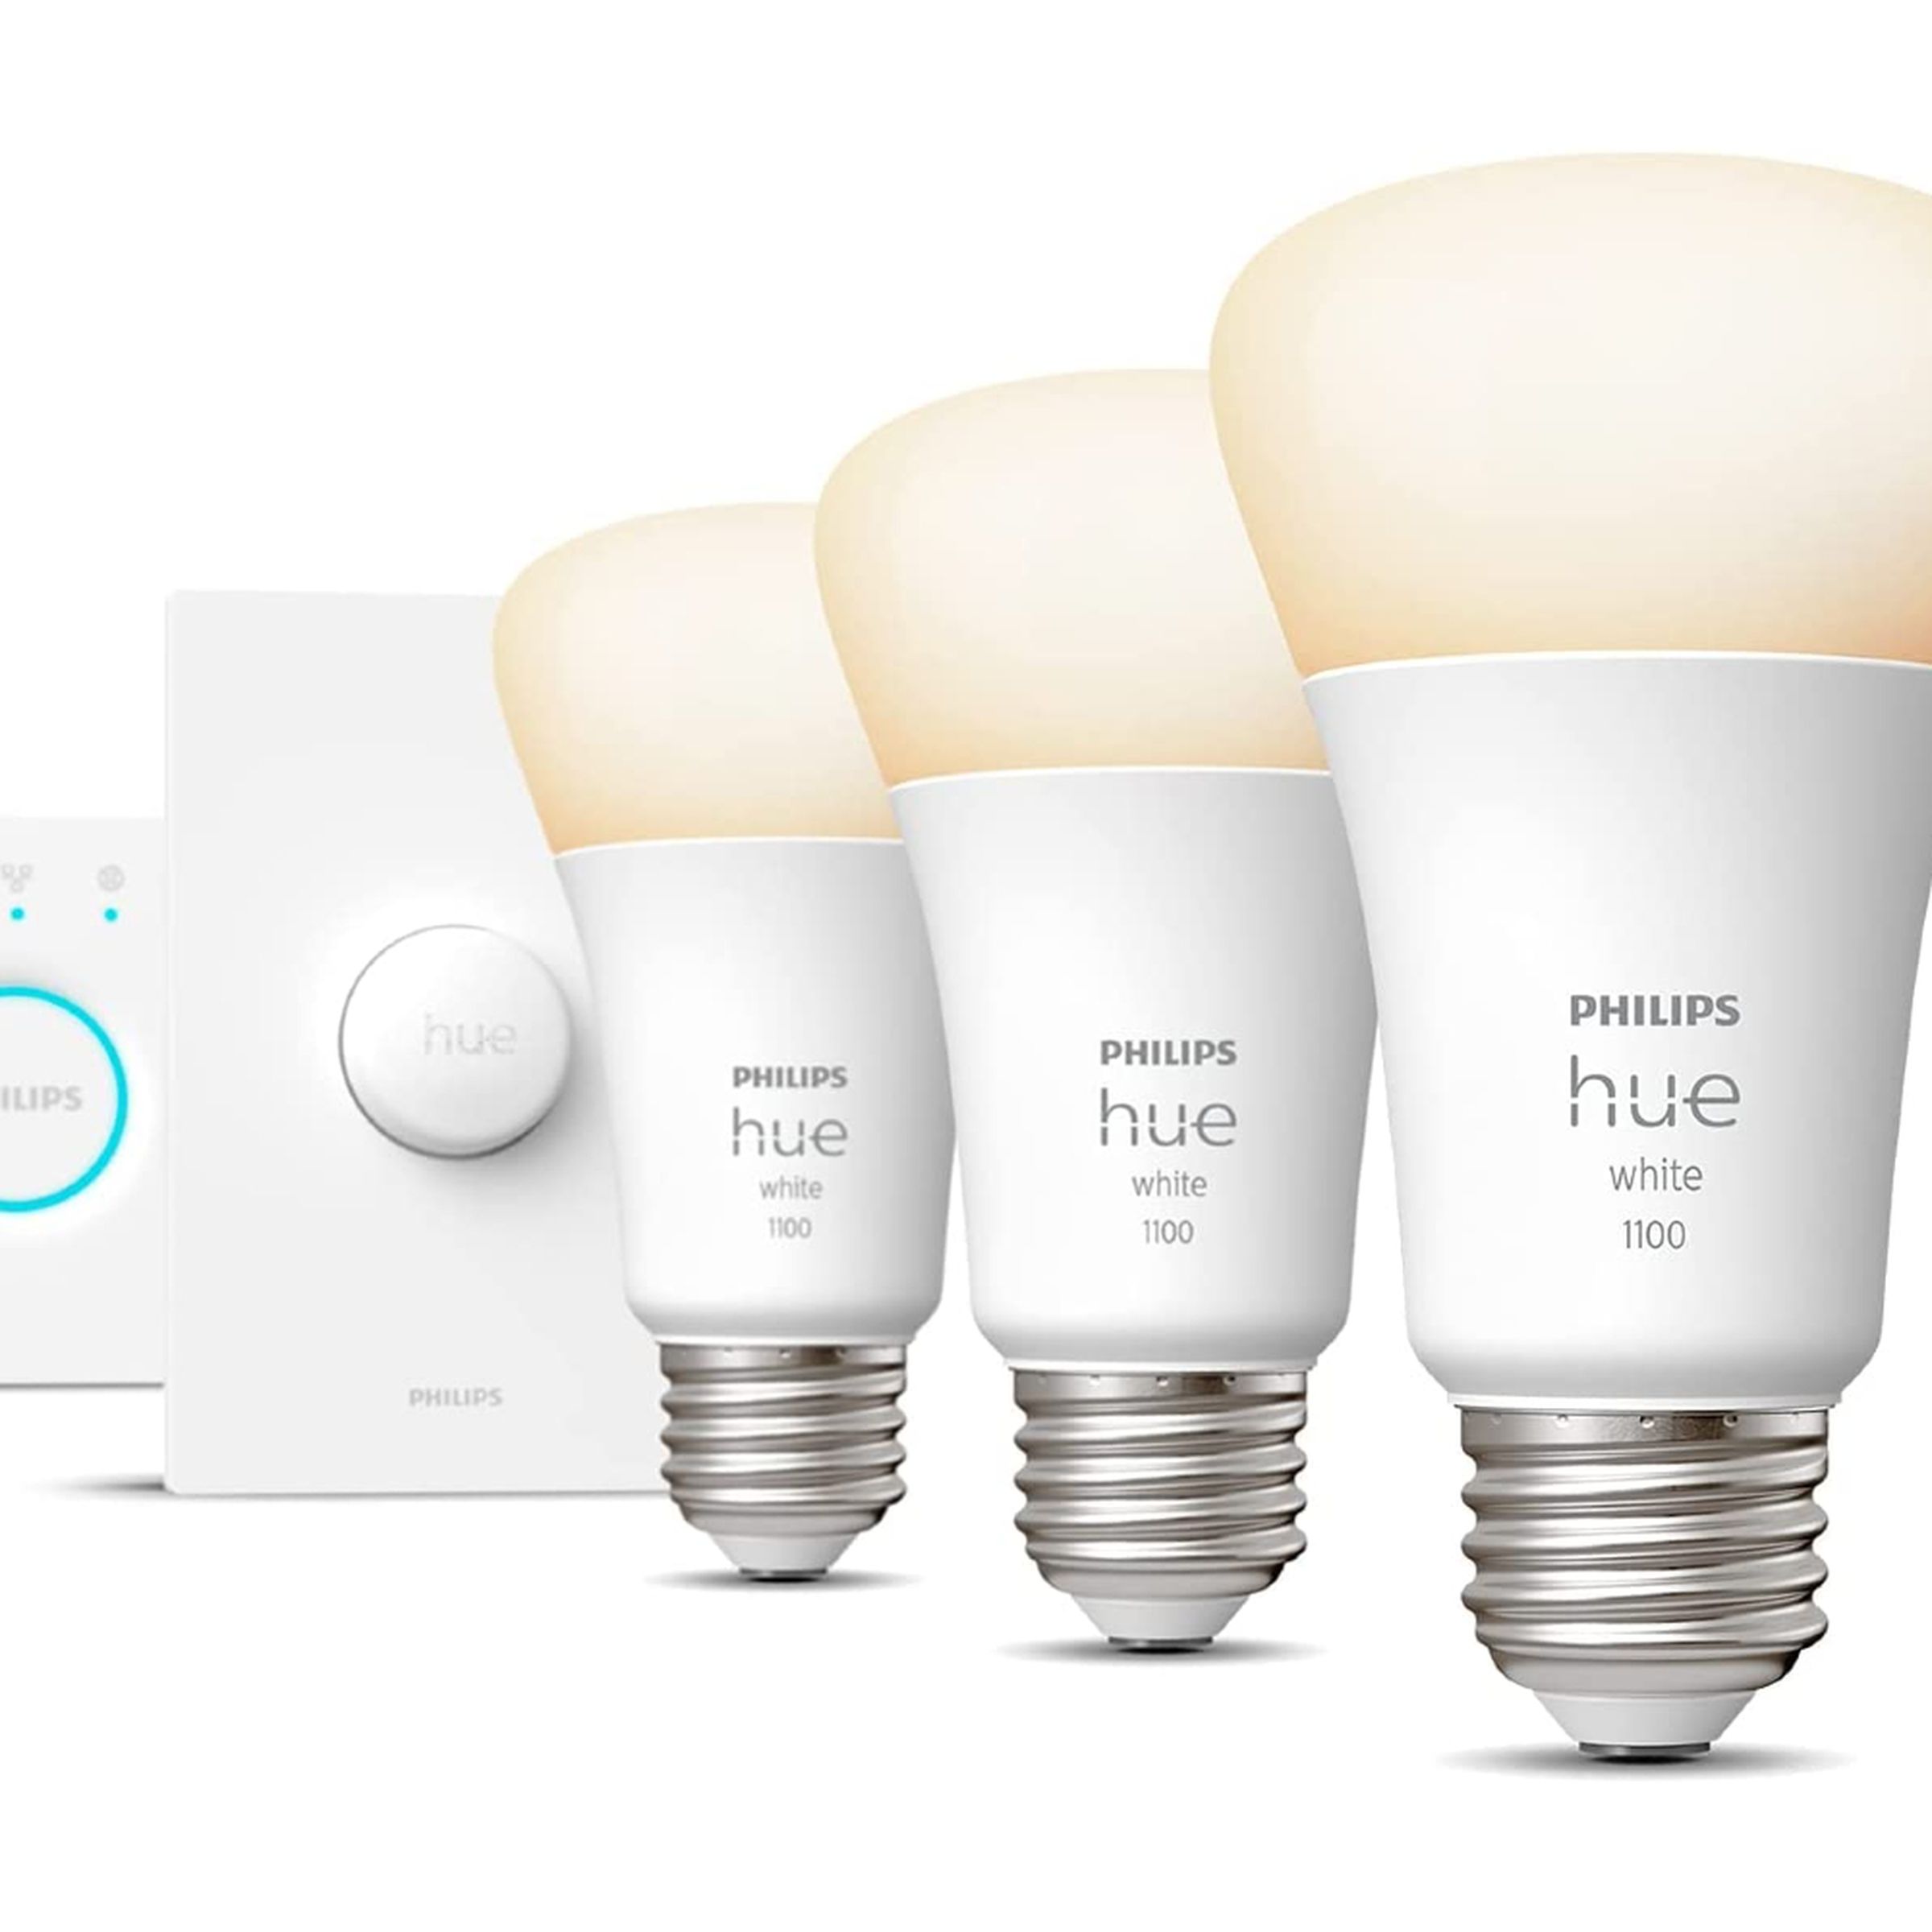 Philips Hue smart LED light bulb gear.